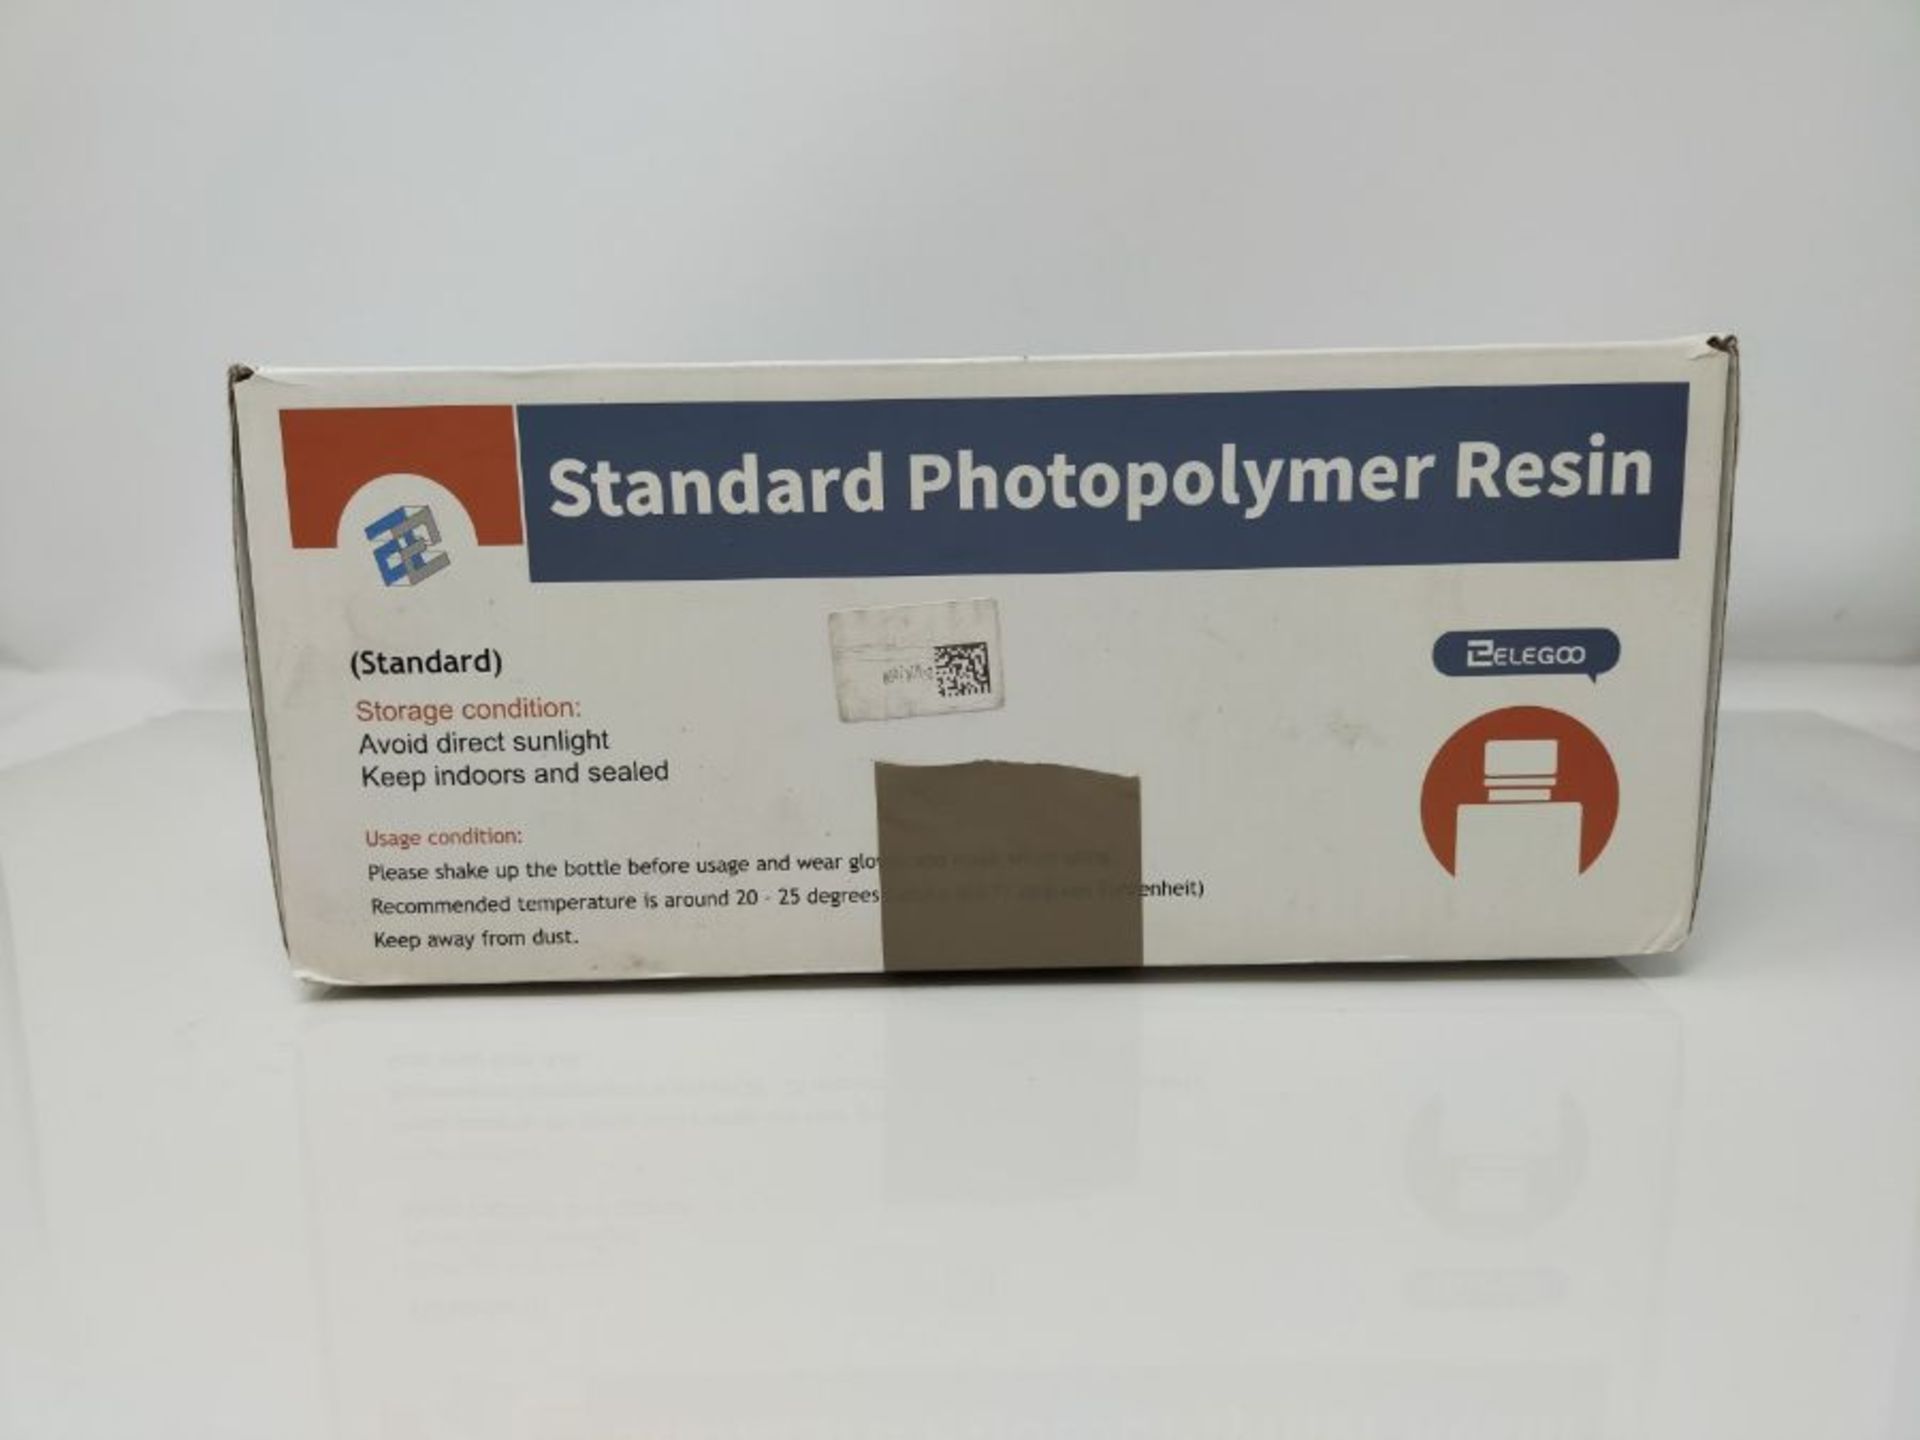 ELEGOO 3D Printer Rapid Resin, 405nm LCD UV-Curing Resin Standard Photopolymer Resin f - Image 3 of 3